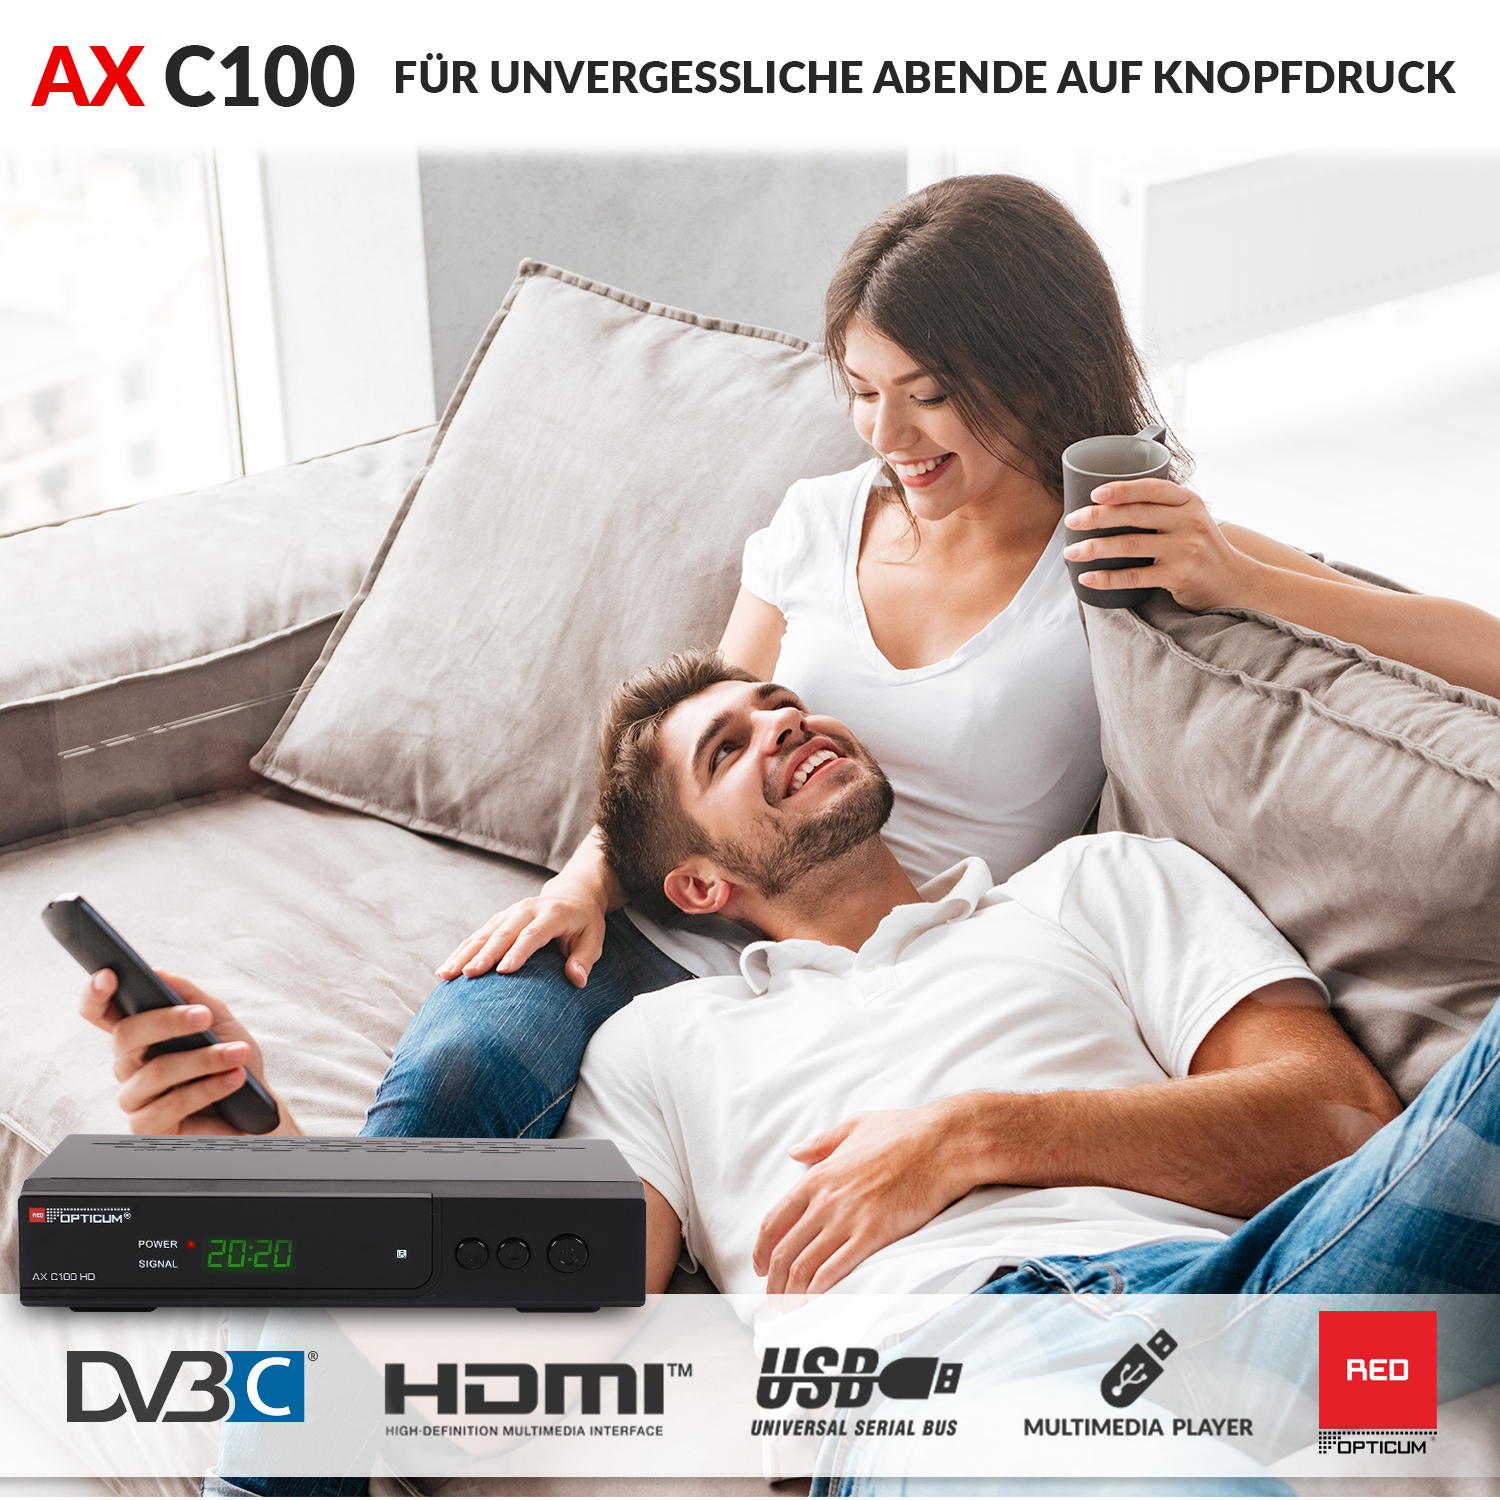 RED OPTICUM AX schwarz) HD- EPG-HDMI-USB Kabelreceiver C100 PVR-Aufnahmefunktion HD (HDTV, DVB-C2, DVB-C, Receiver Digitaler PVR-Funktion, -SCART DVB-C mit Kabel-Receiver I